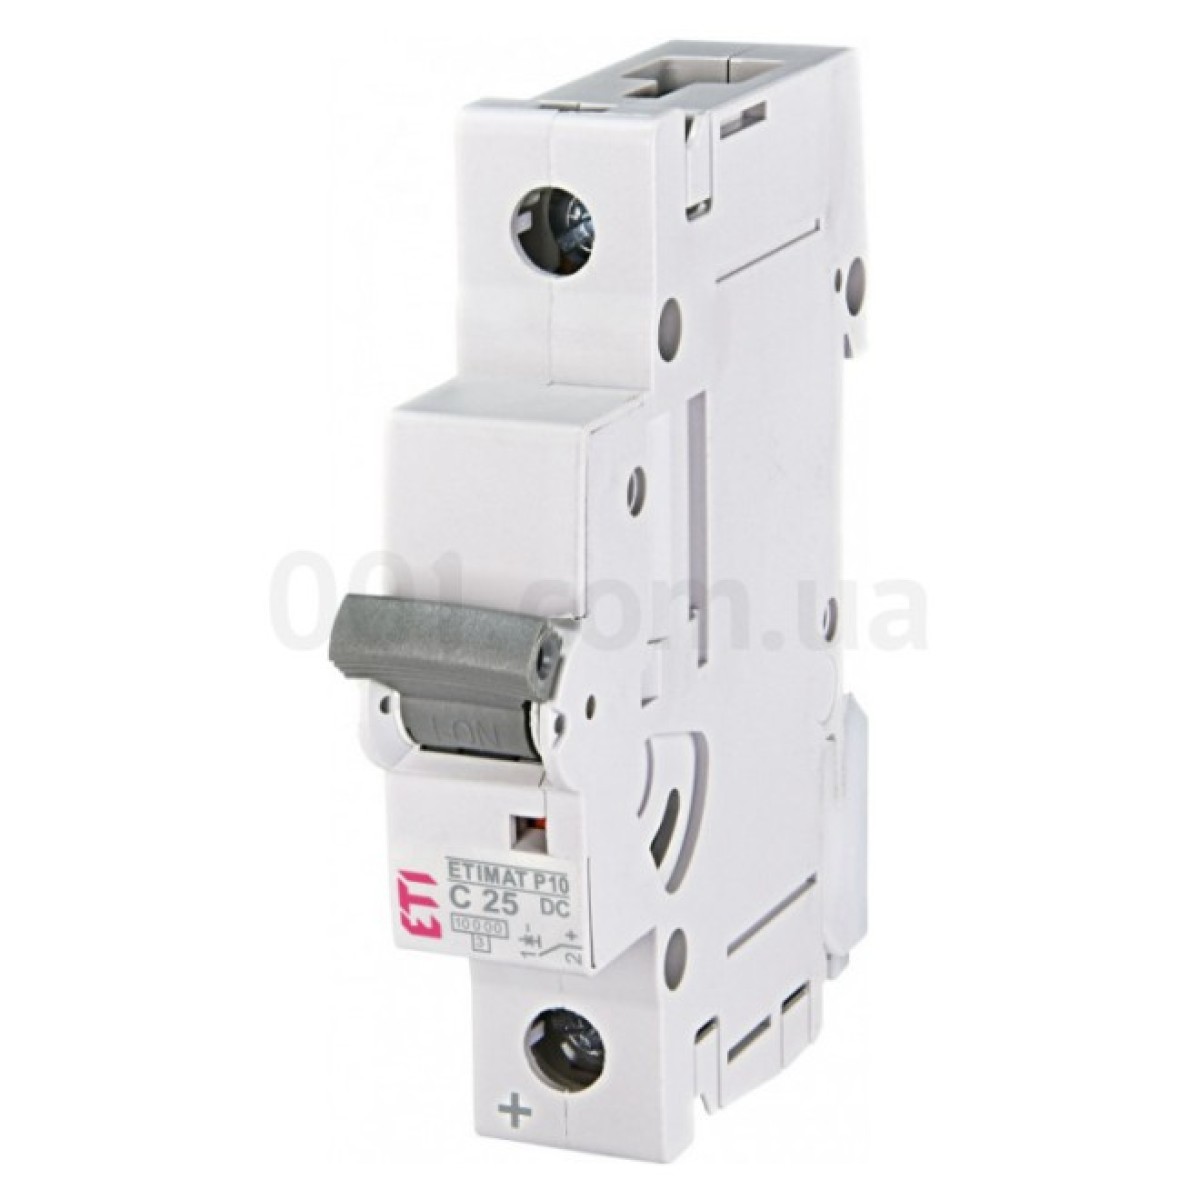 Автоматический выключатель ETIMAT P10 DC (10кА) 1P 25 А хар-ка C, ETI 98_98.jpg - фото 1